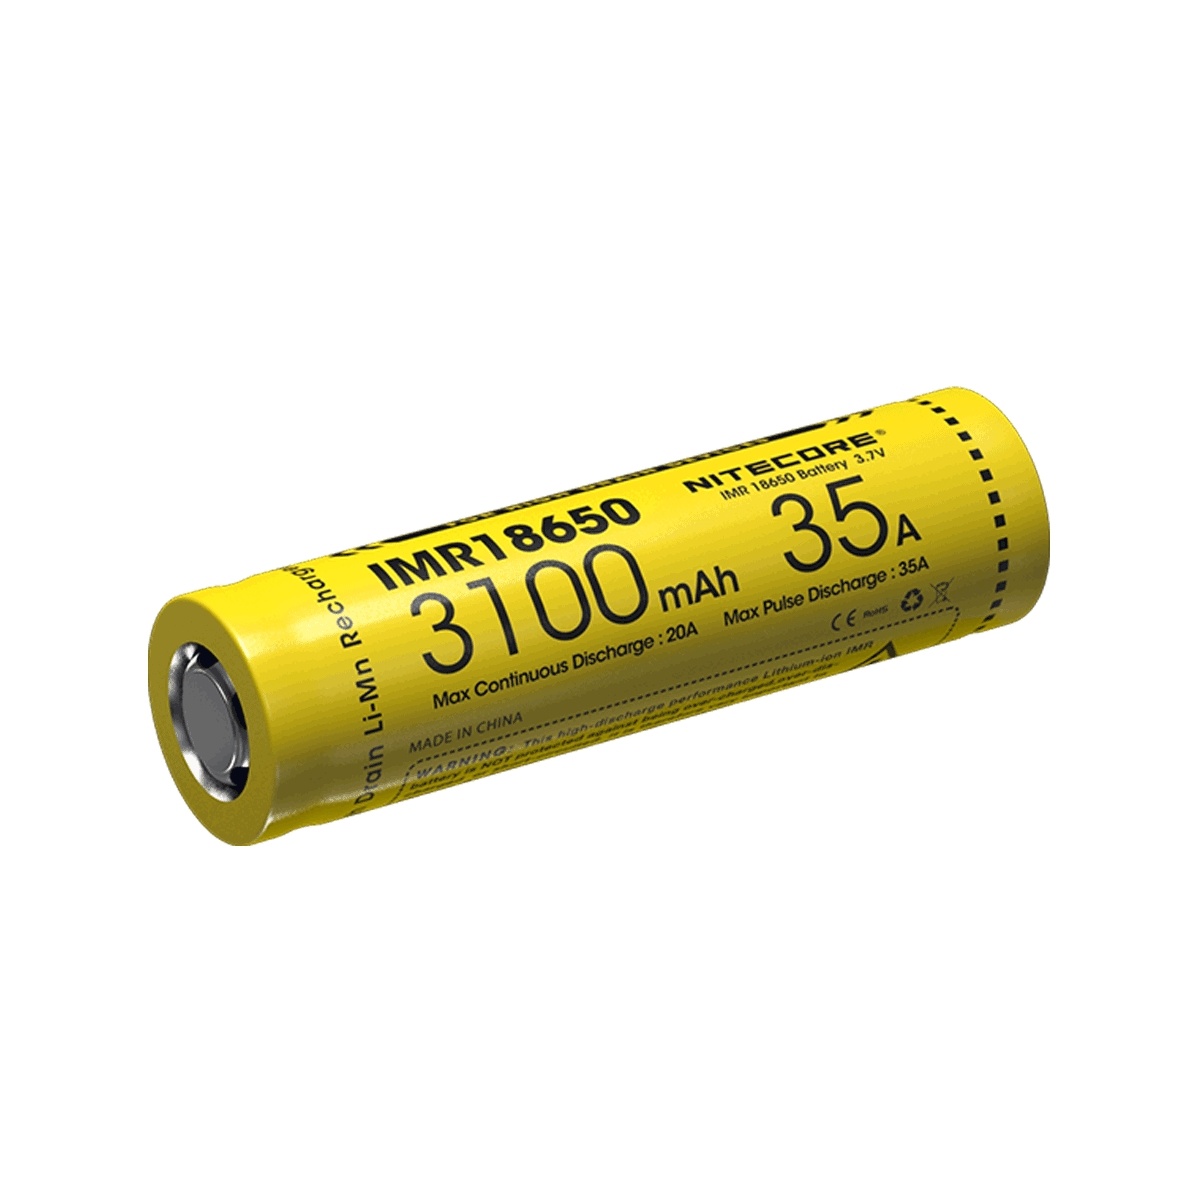 NITECORE NI18650A Li-Ion Rechargeable IMR 18650 Battery (3100mAh)